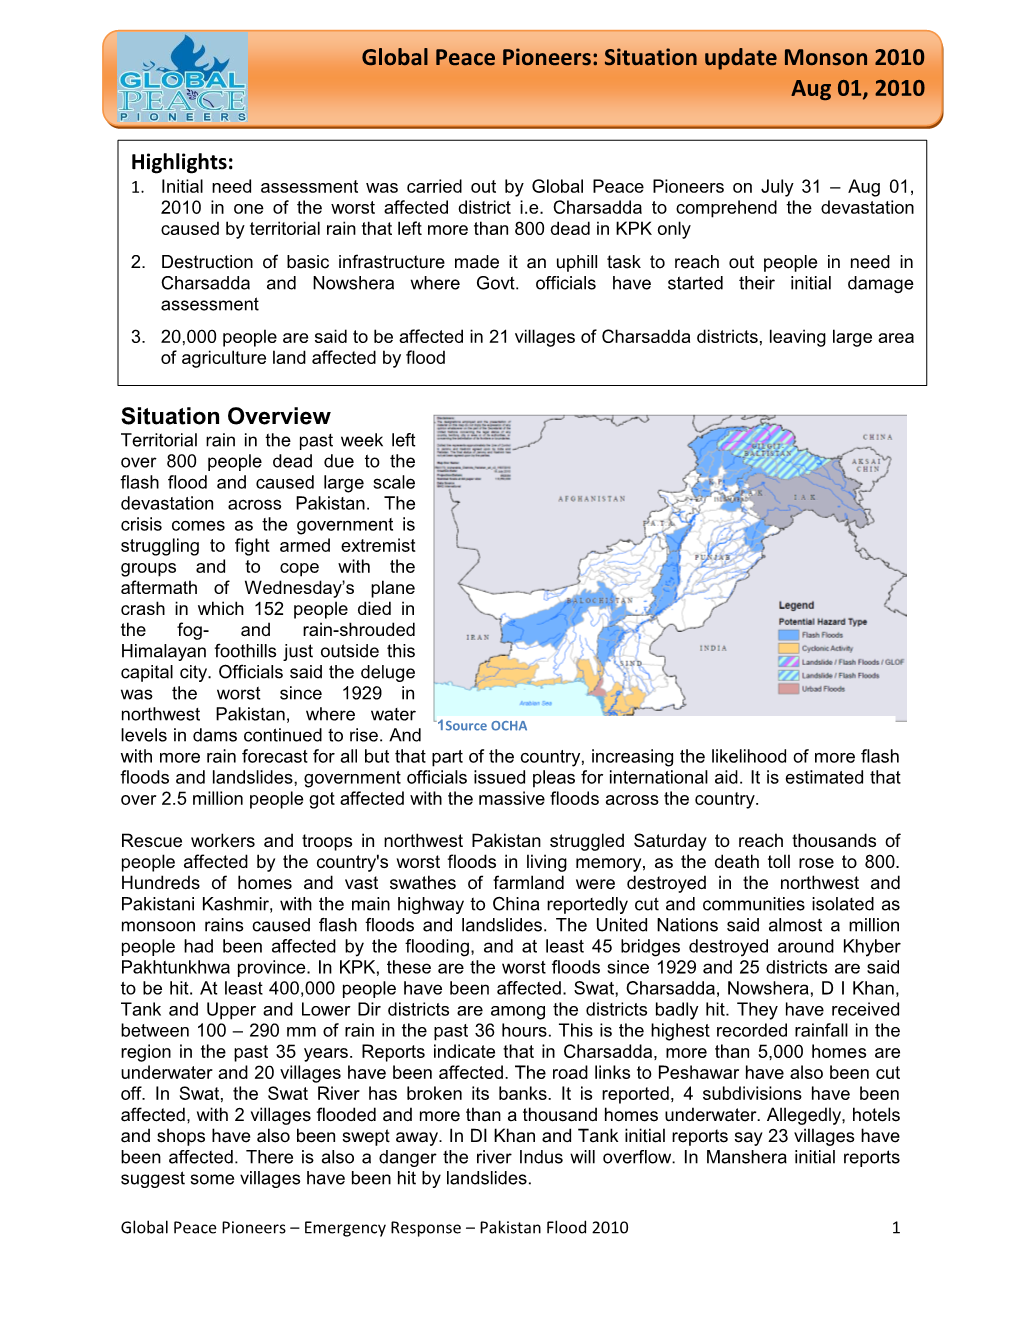 Charsadda Flood Assessment Report (Aug 01, 2010)